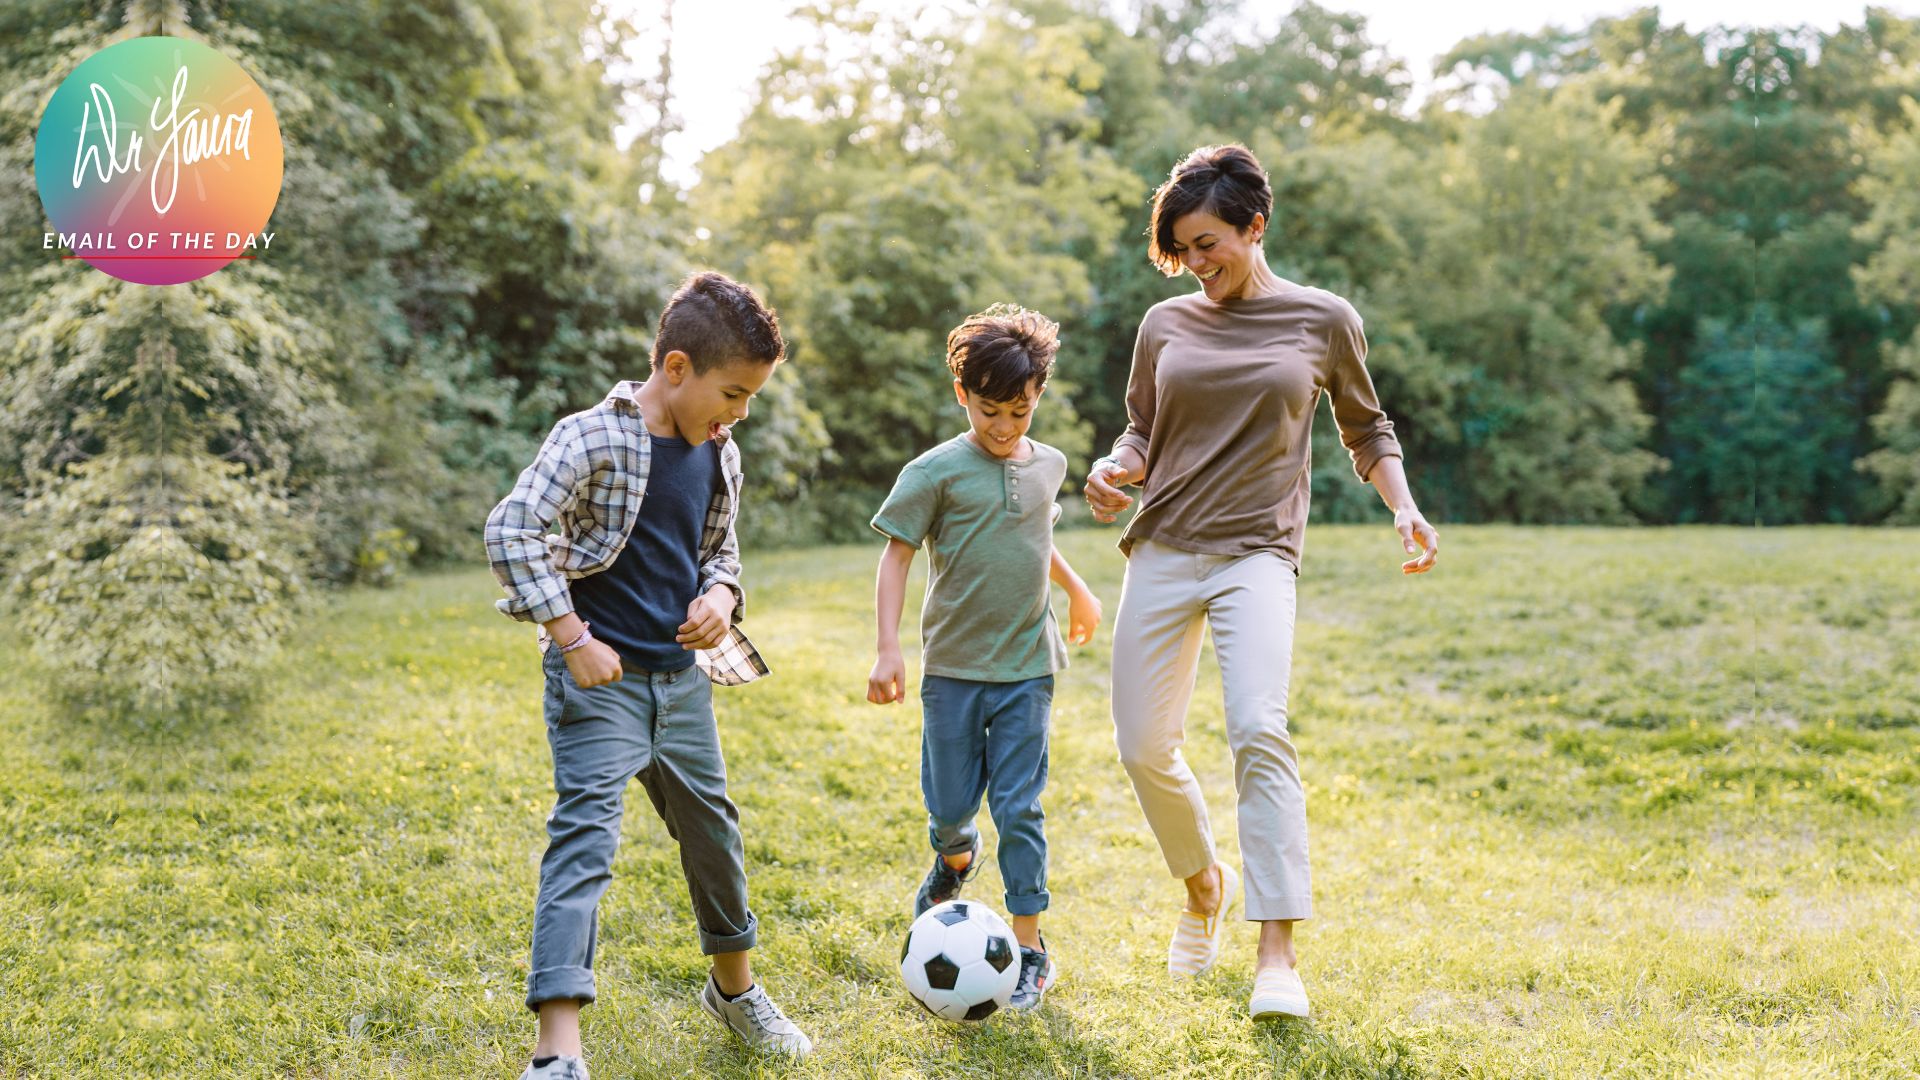 Mom kicks soccer ball outside with two young boys